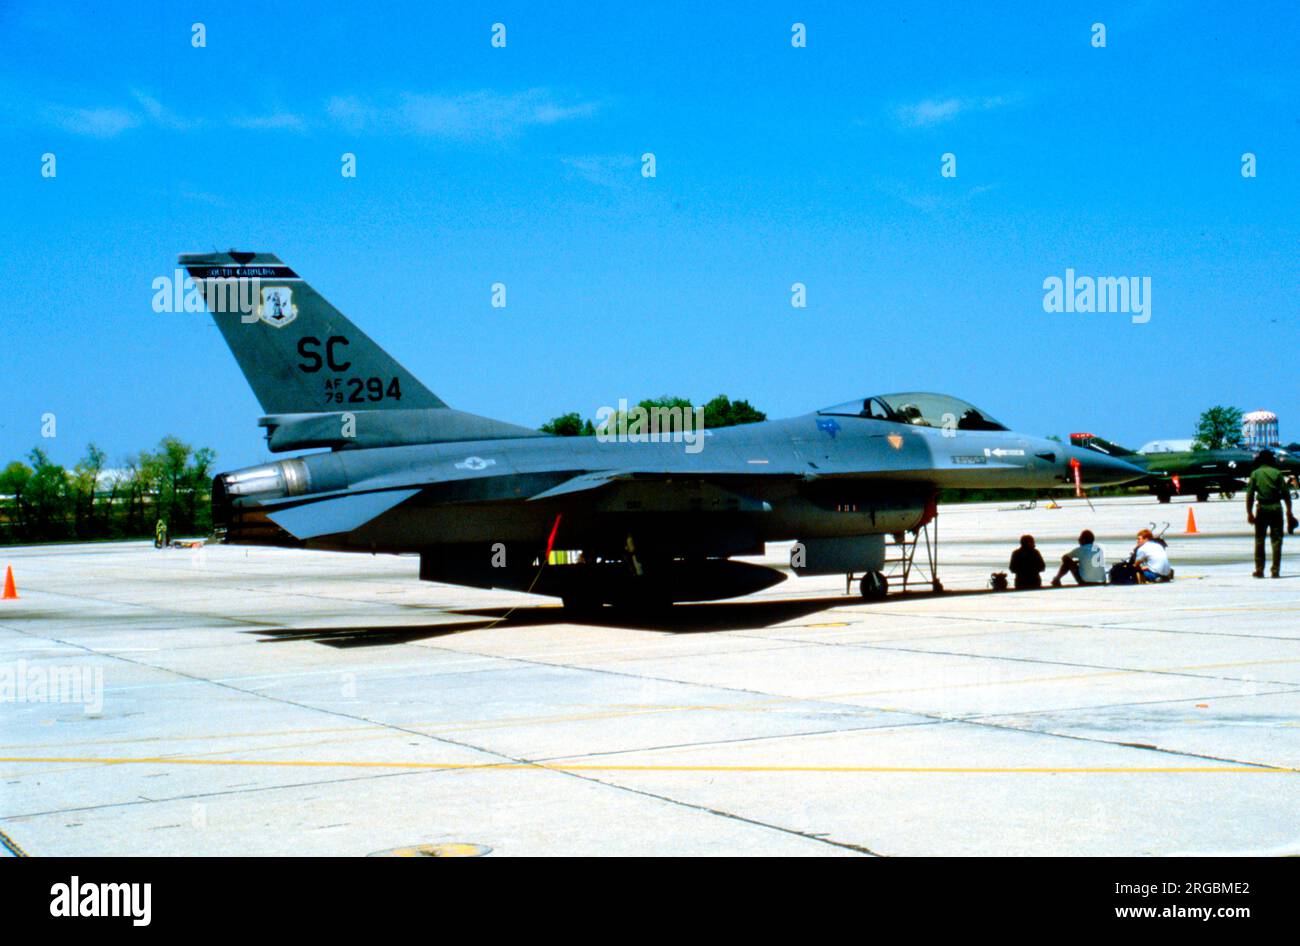 United States Air Force (USAF) - General Dynamics F-16A Block 10 Fighting Falcon 79-0294 (msn 61-79, codice base 'SC'), della South Carolina Air National Guard. Foto Stock